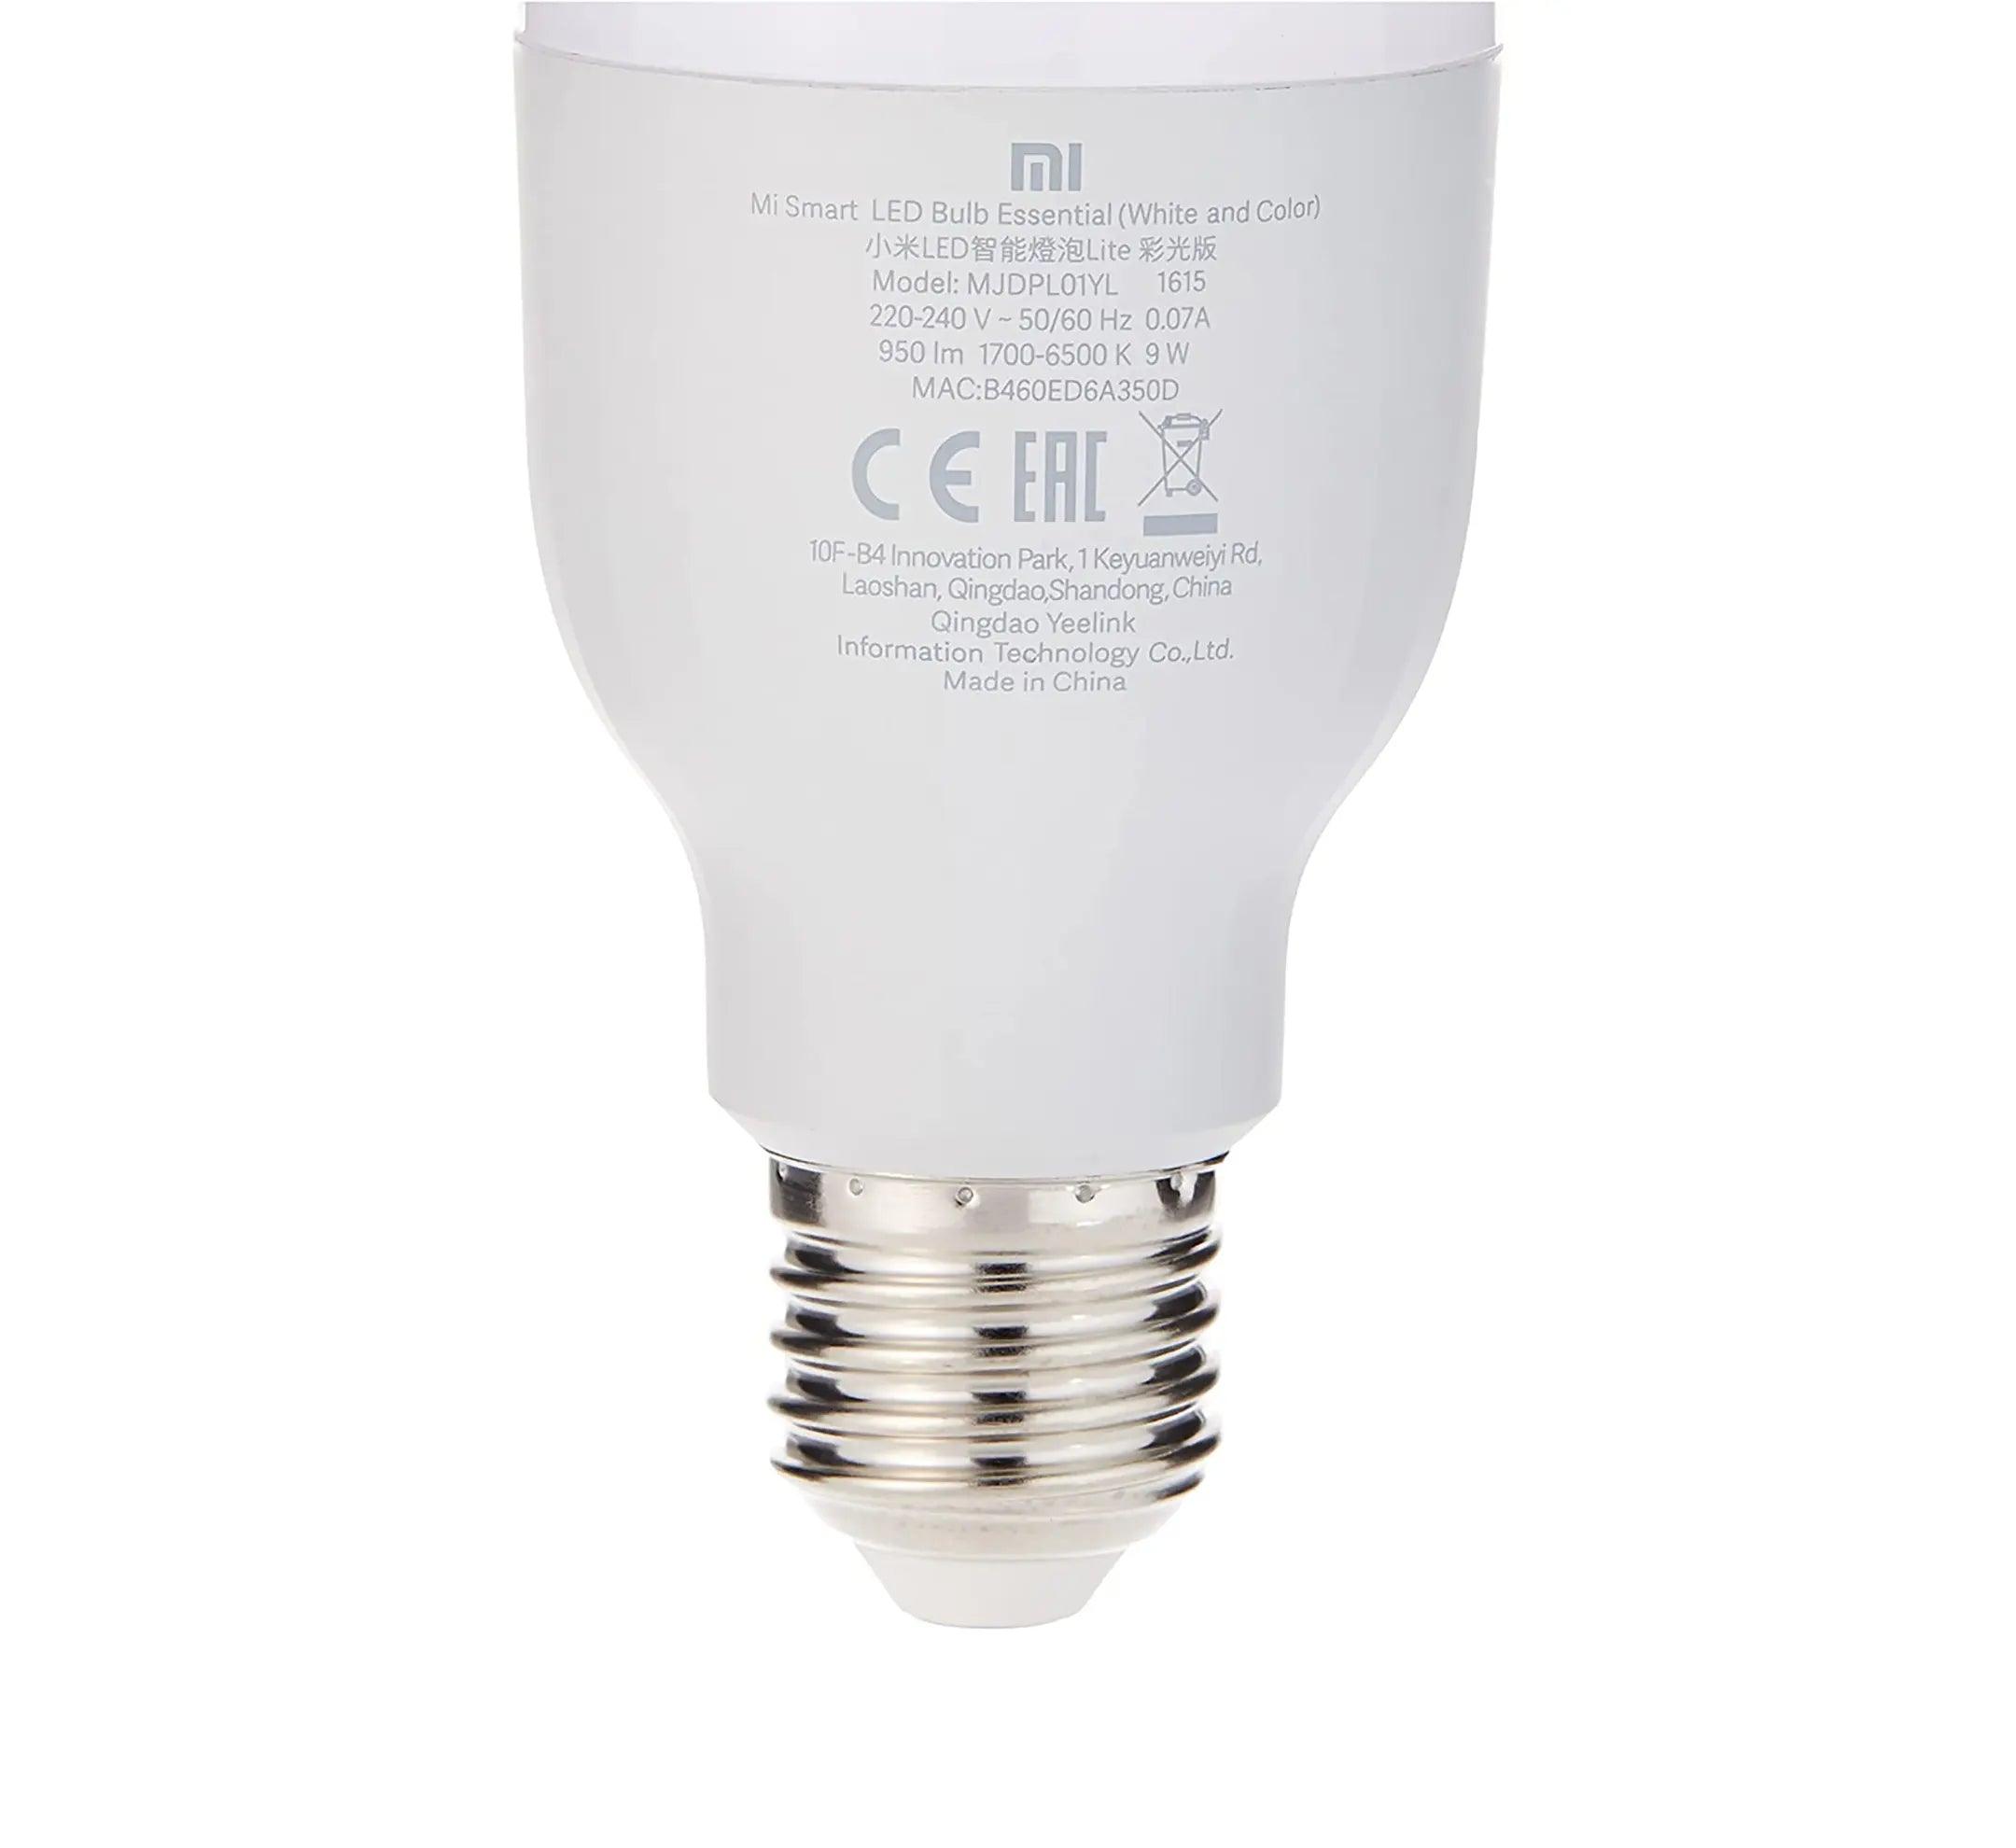 Mi Smart LED Bulb Essential (White and Color) - Brightex Retail UK